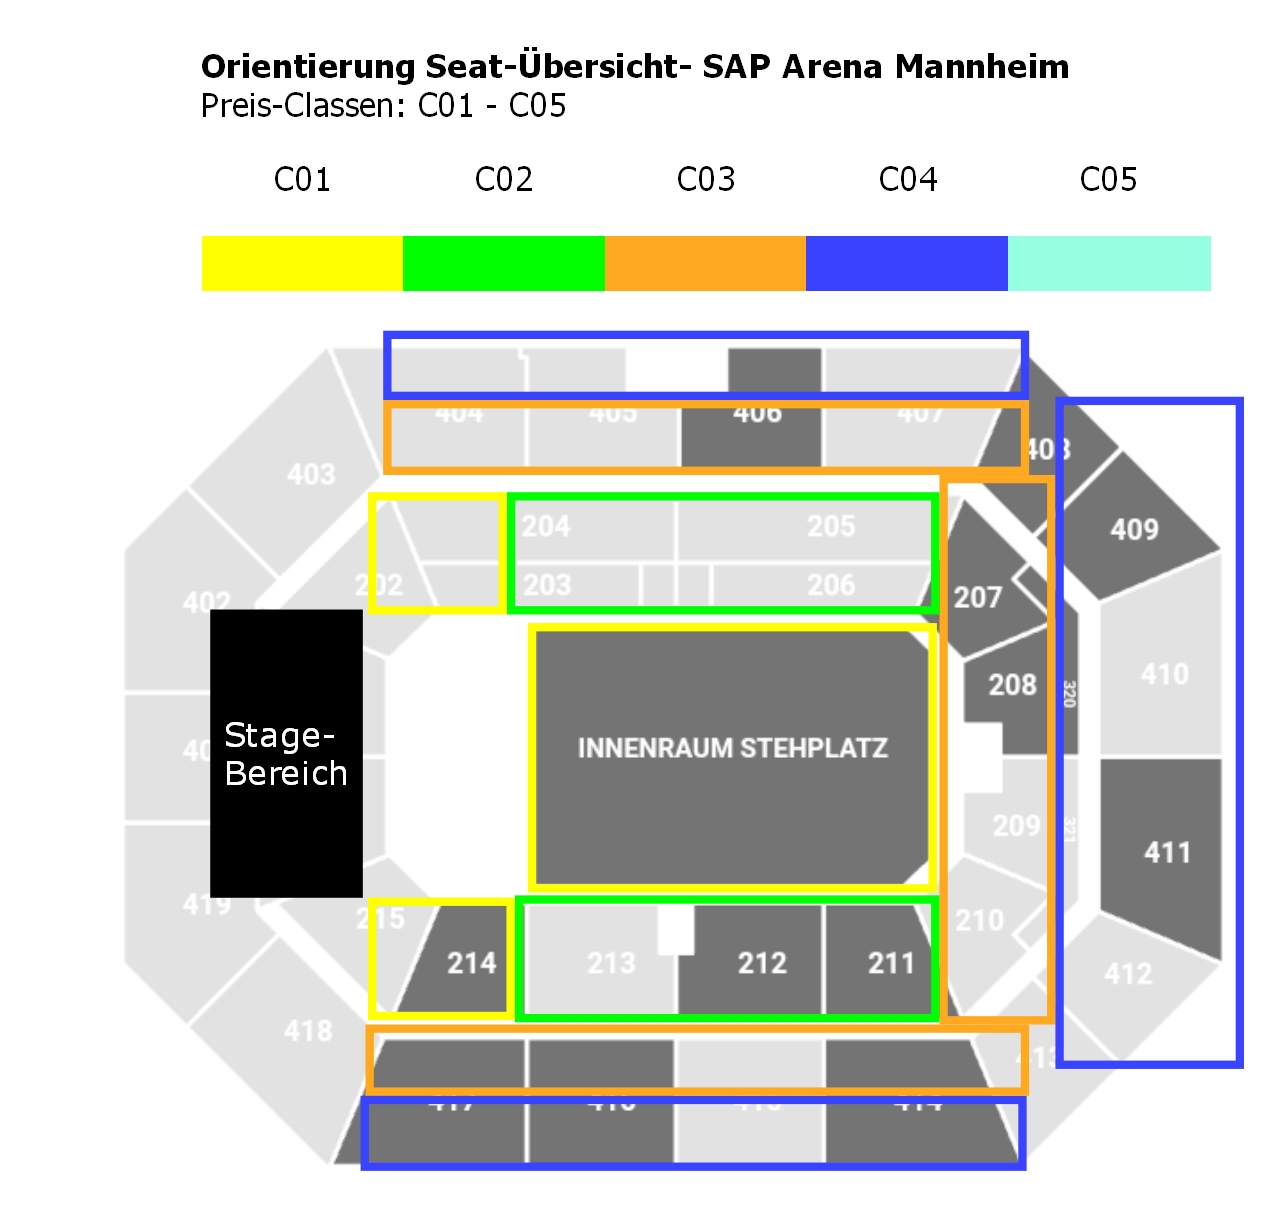 seats-sap-mannheim.jpg